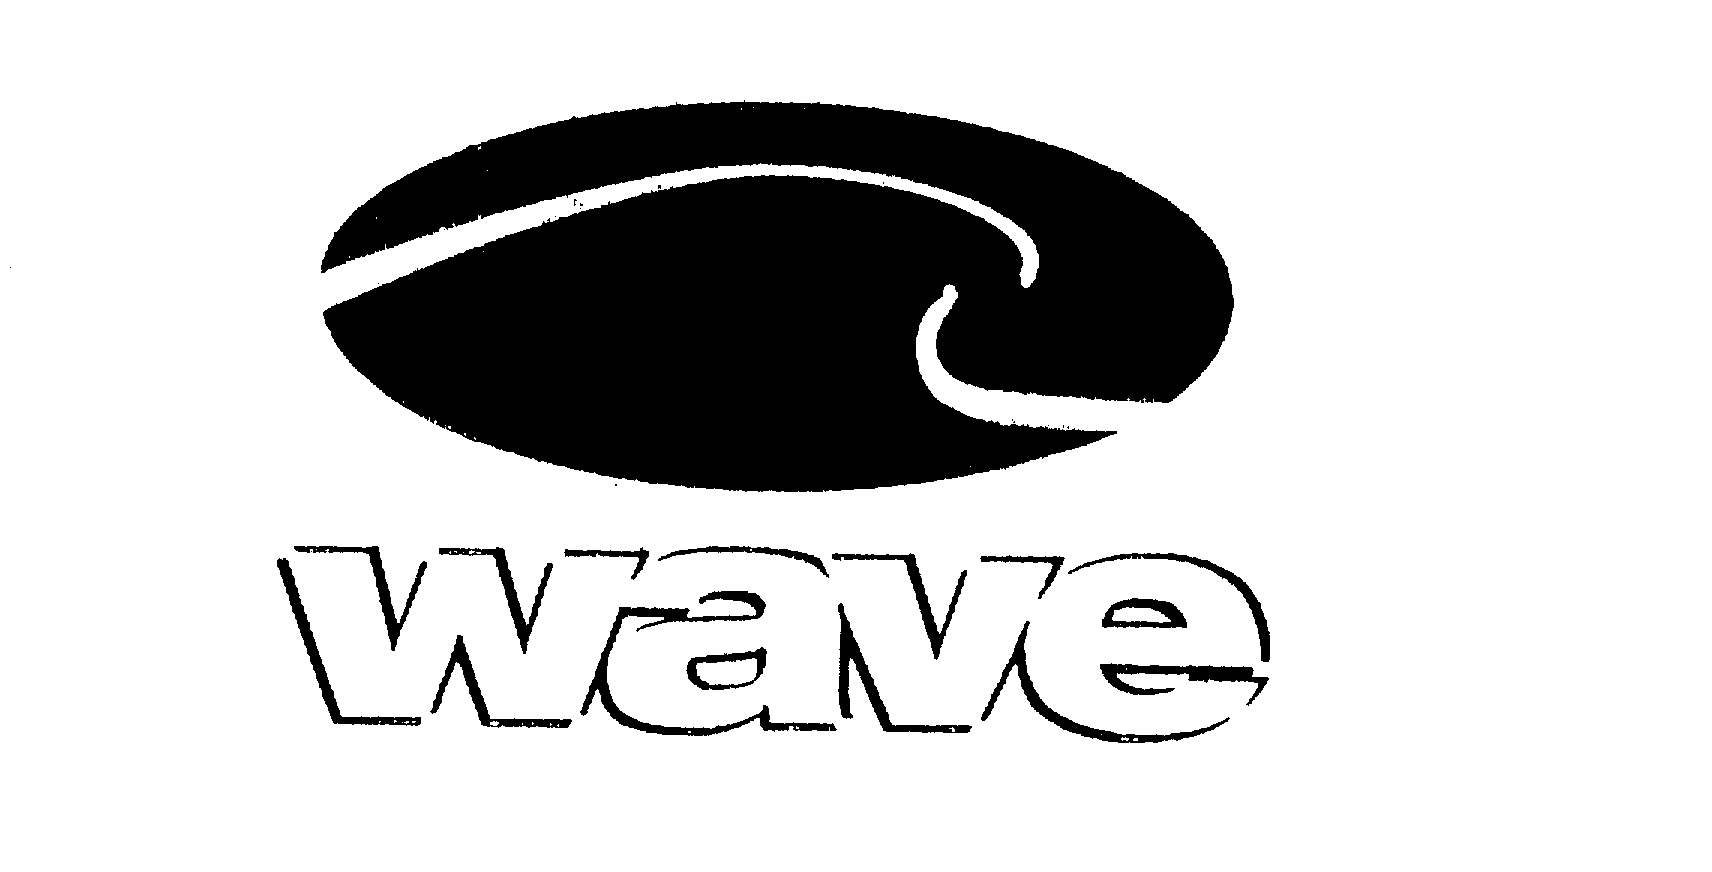  WAVE